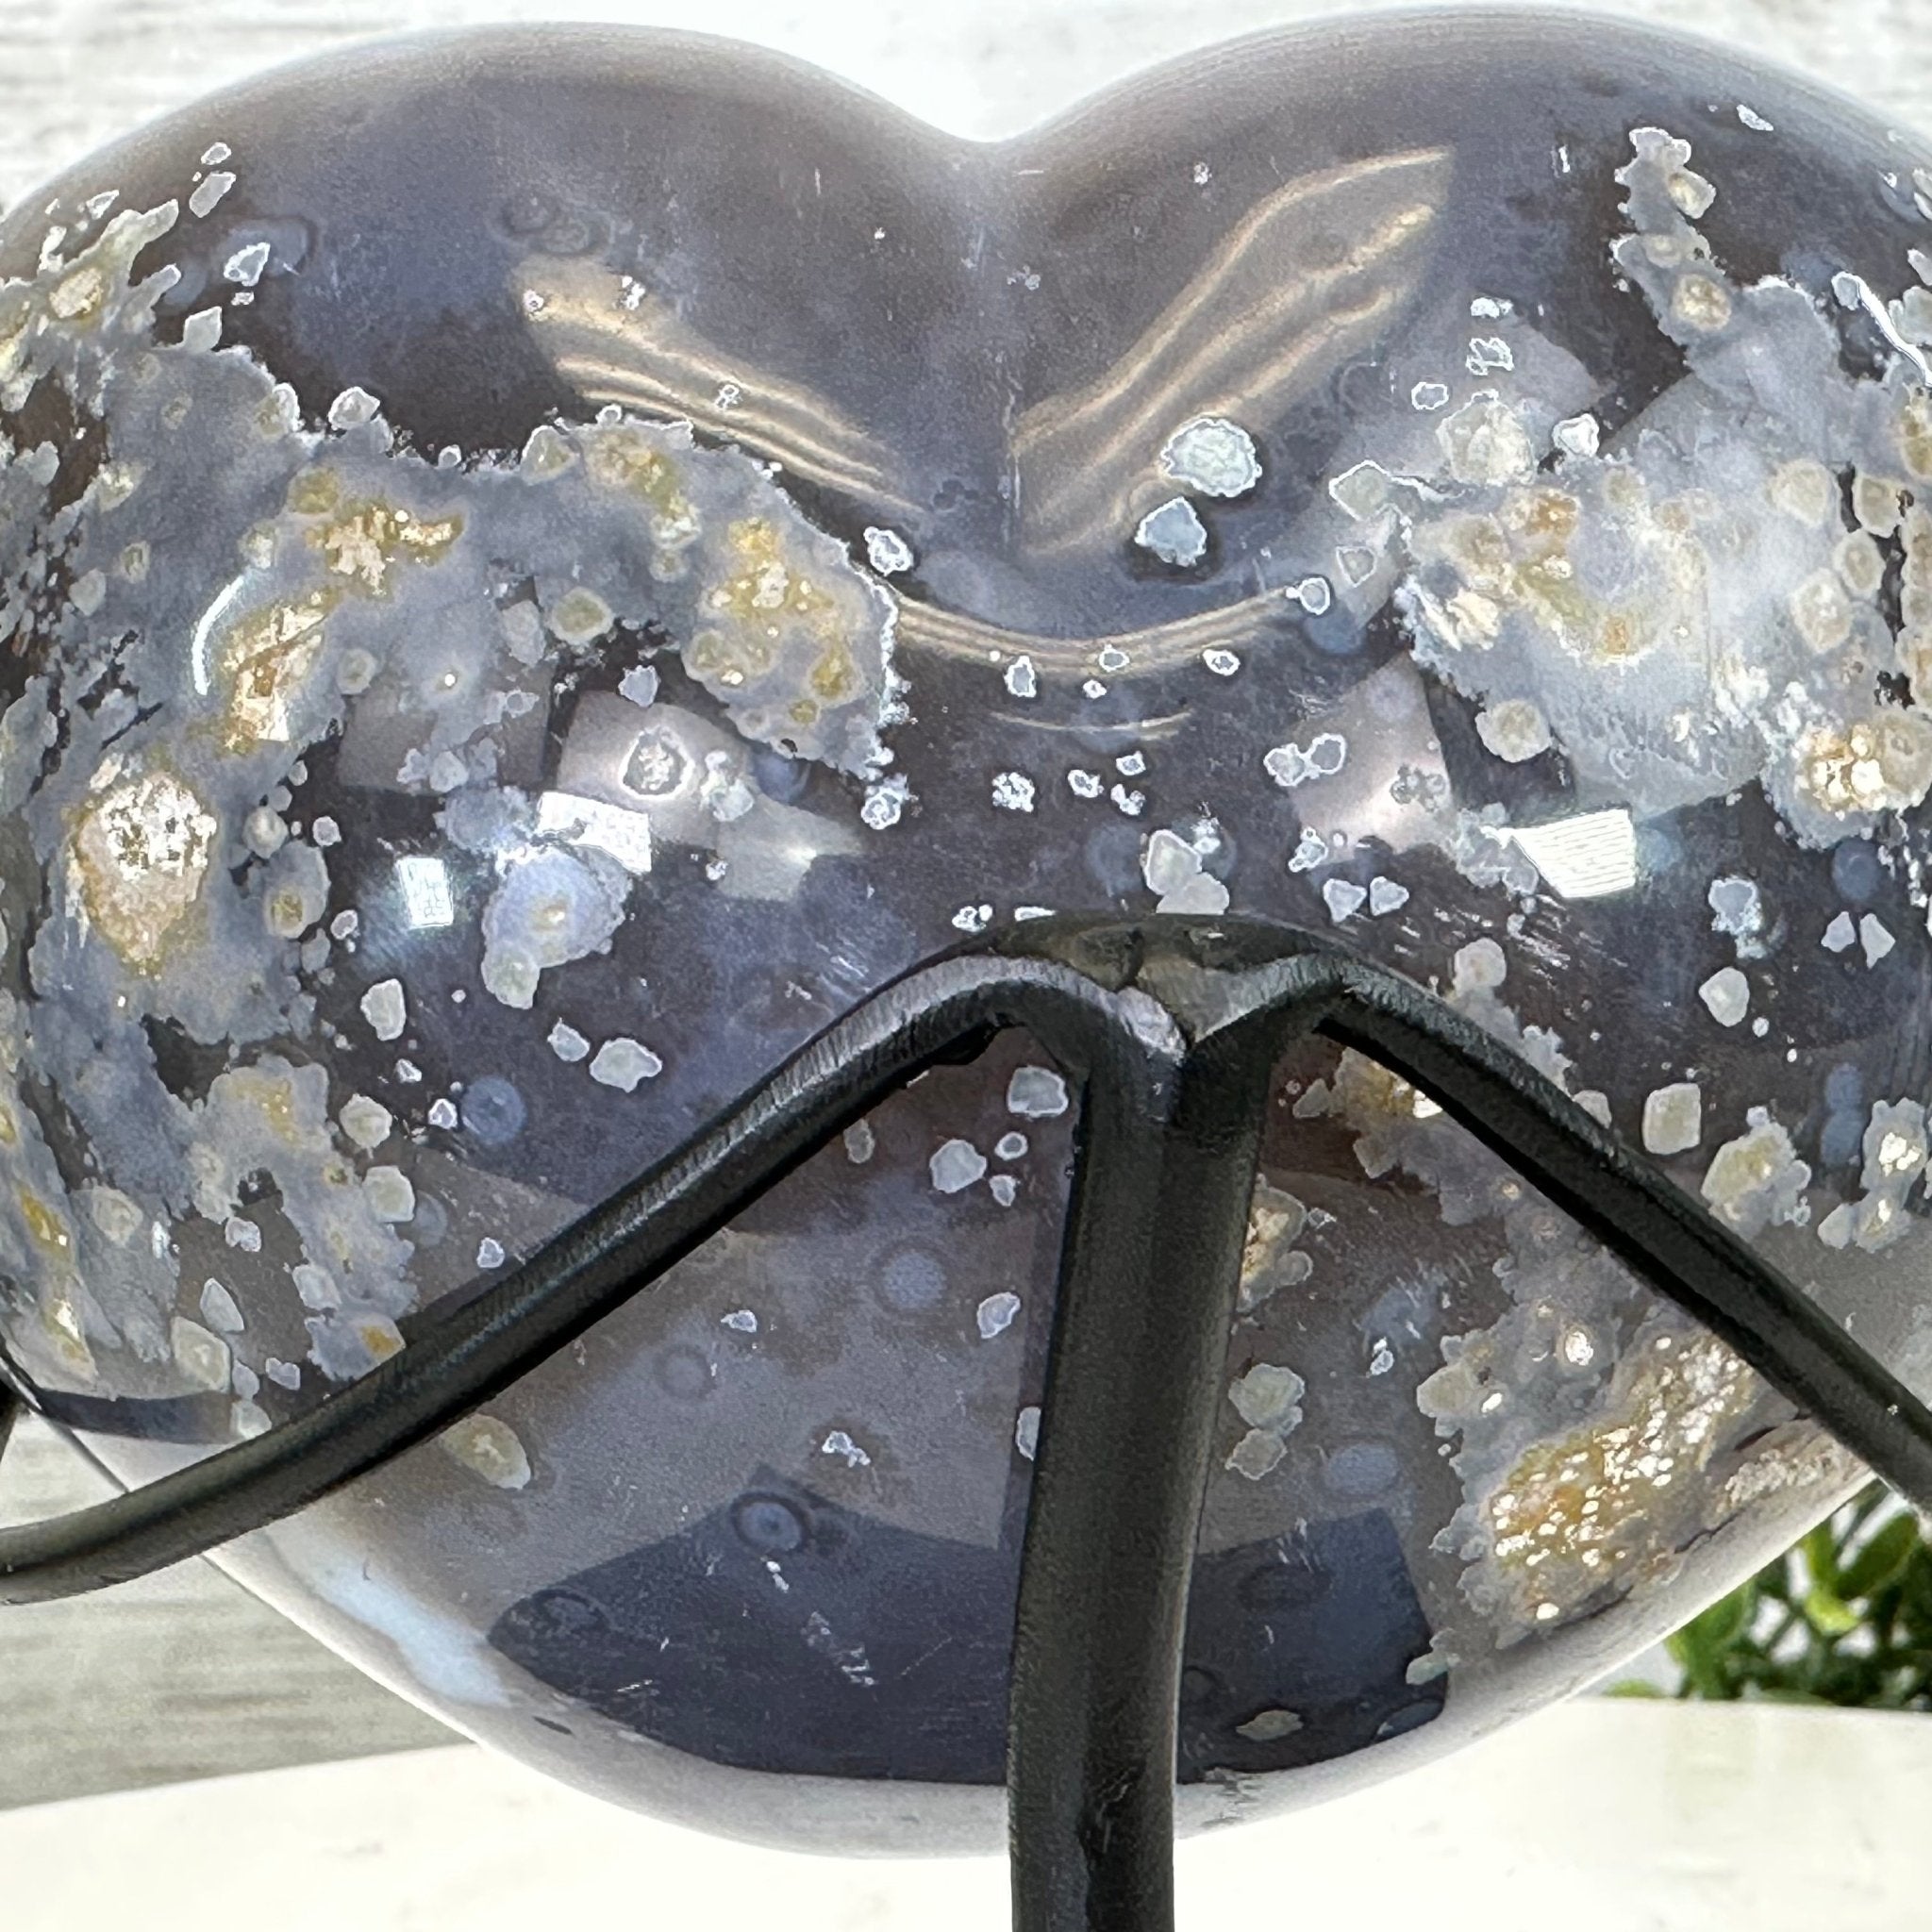 Polished Agate Heart Geode on a Metal Stand, 2.1 lbs & 5" Tall, Model #5468-0041 by Brazil Gems - Brazil GemsBrazil GemsPolished Agate Heart Geode on a Metal Stand, 2.1 lbs & 5" Tall, Model #5468-0041 by Brazil GemsHearts5468-0041